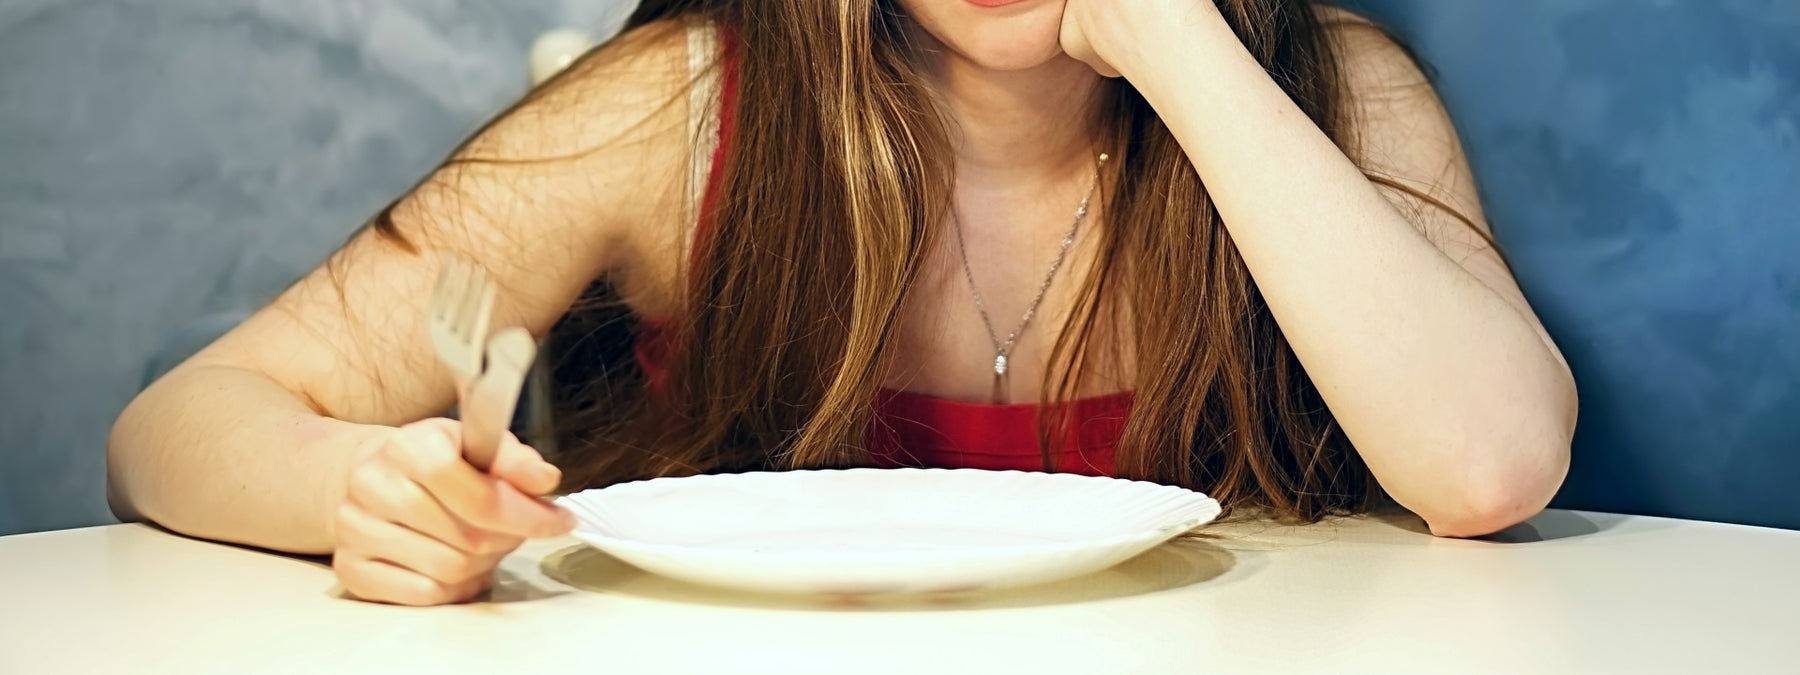 Orthorexia Nervosa - When Healthy Eating Goes Too Far